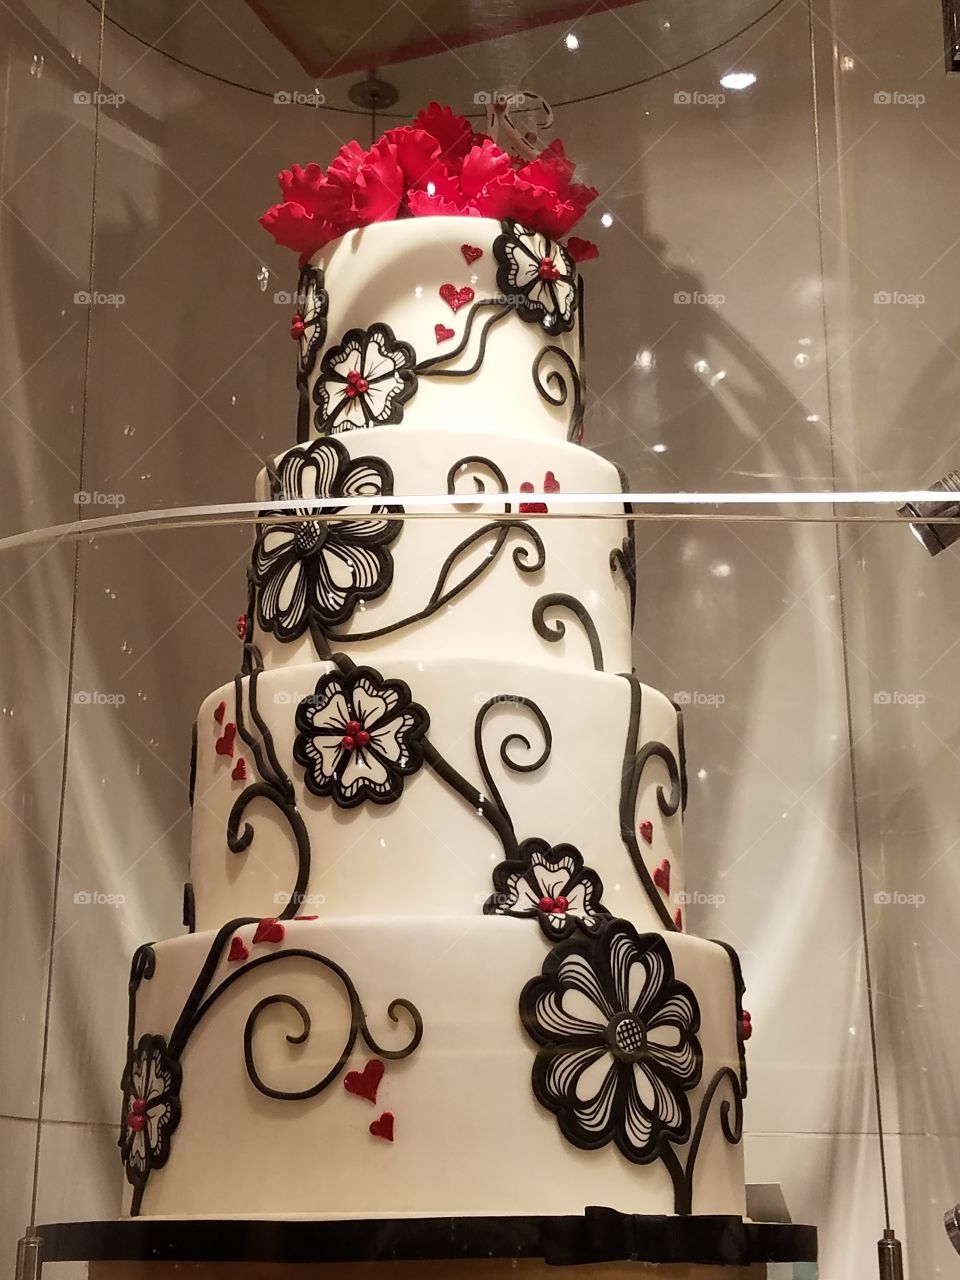 Beautiful cake!!